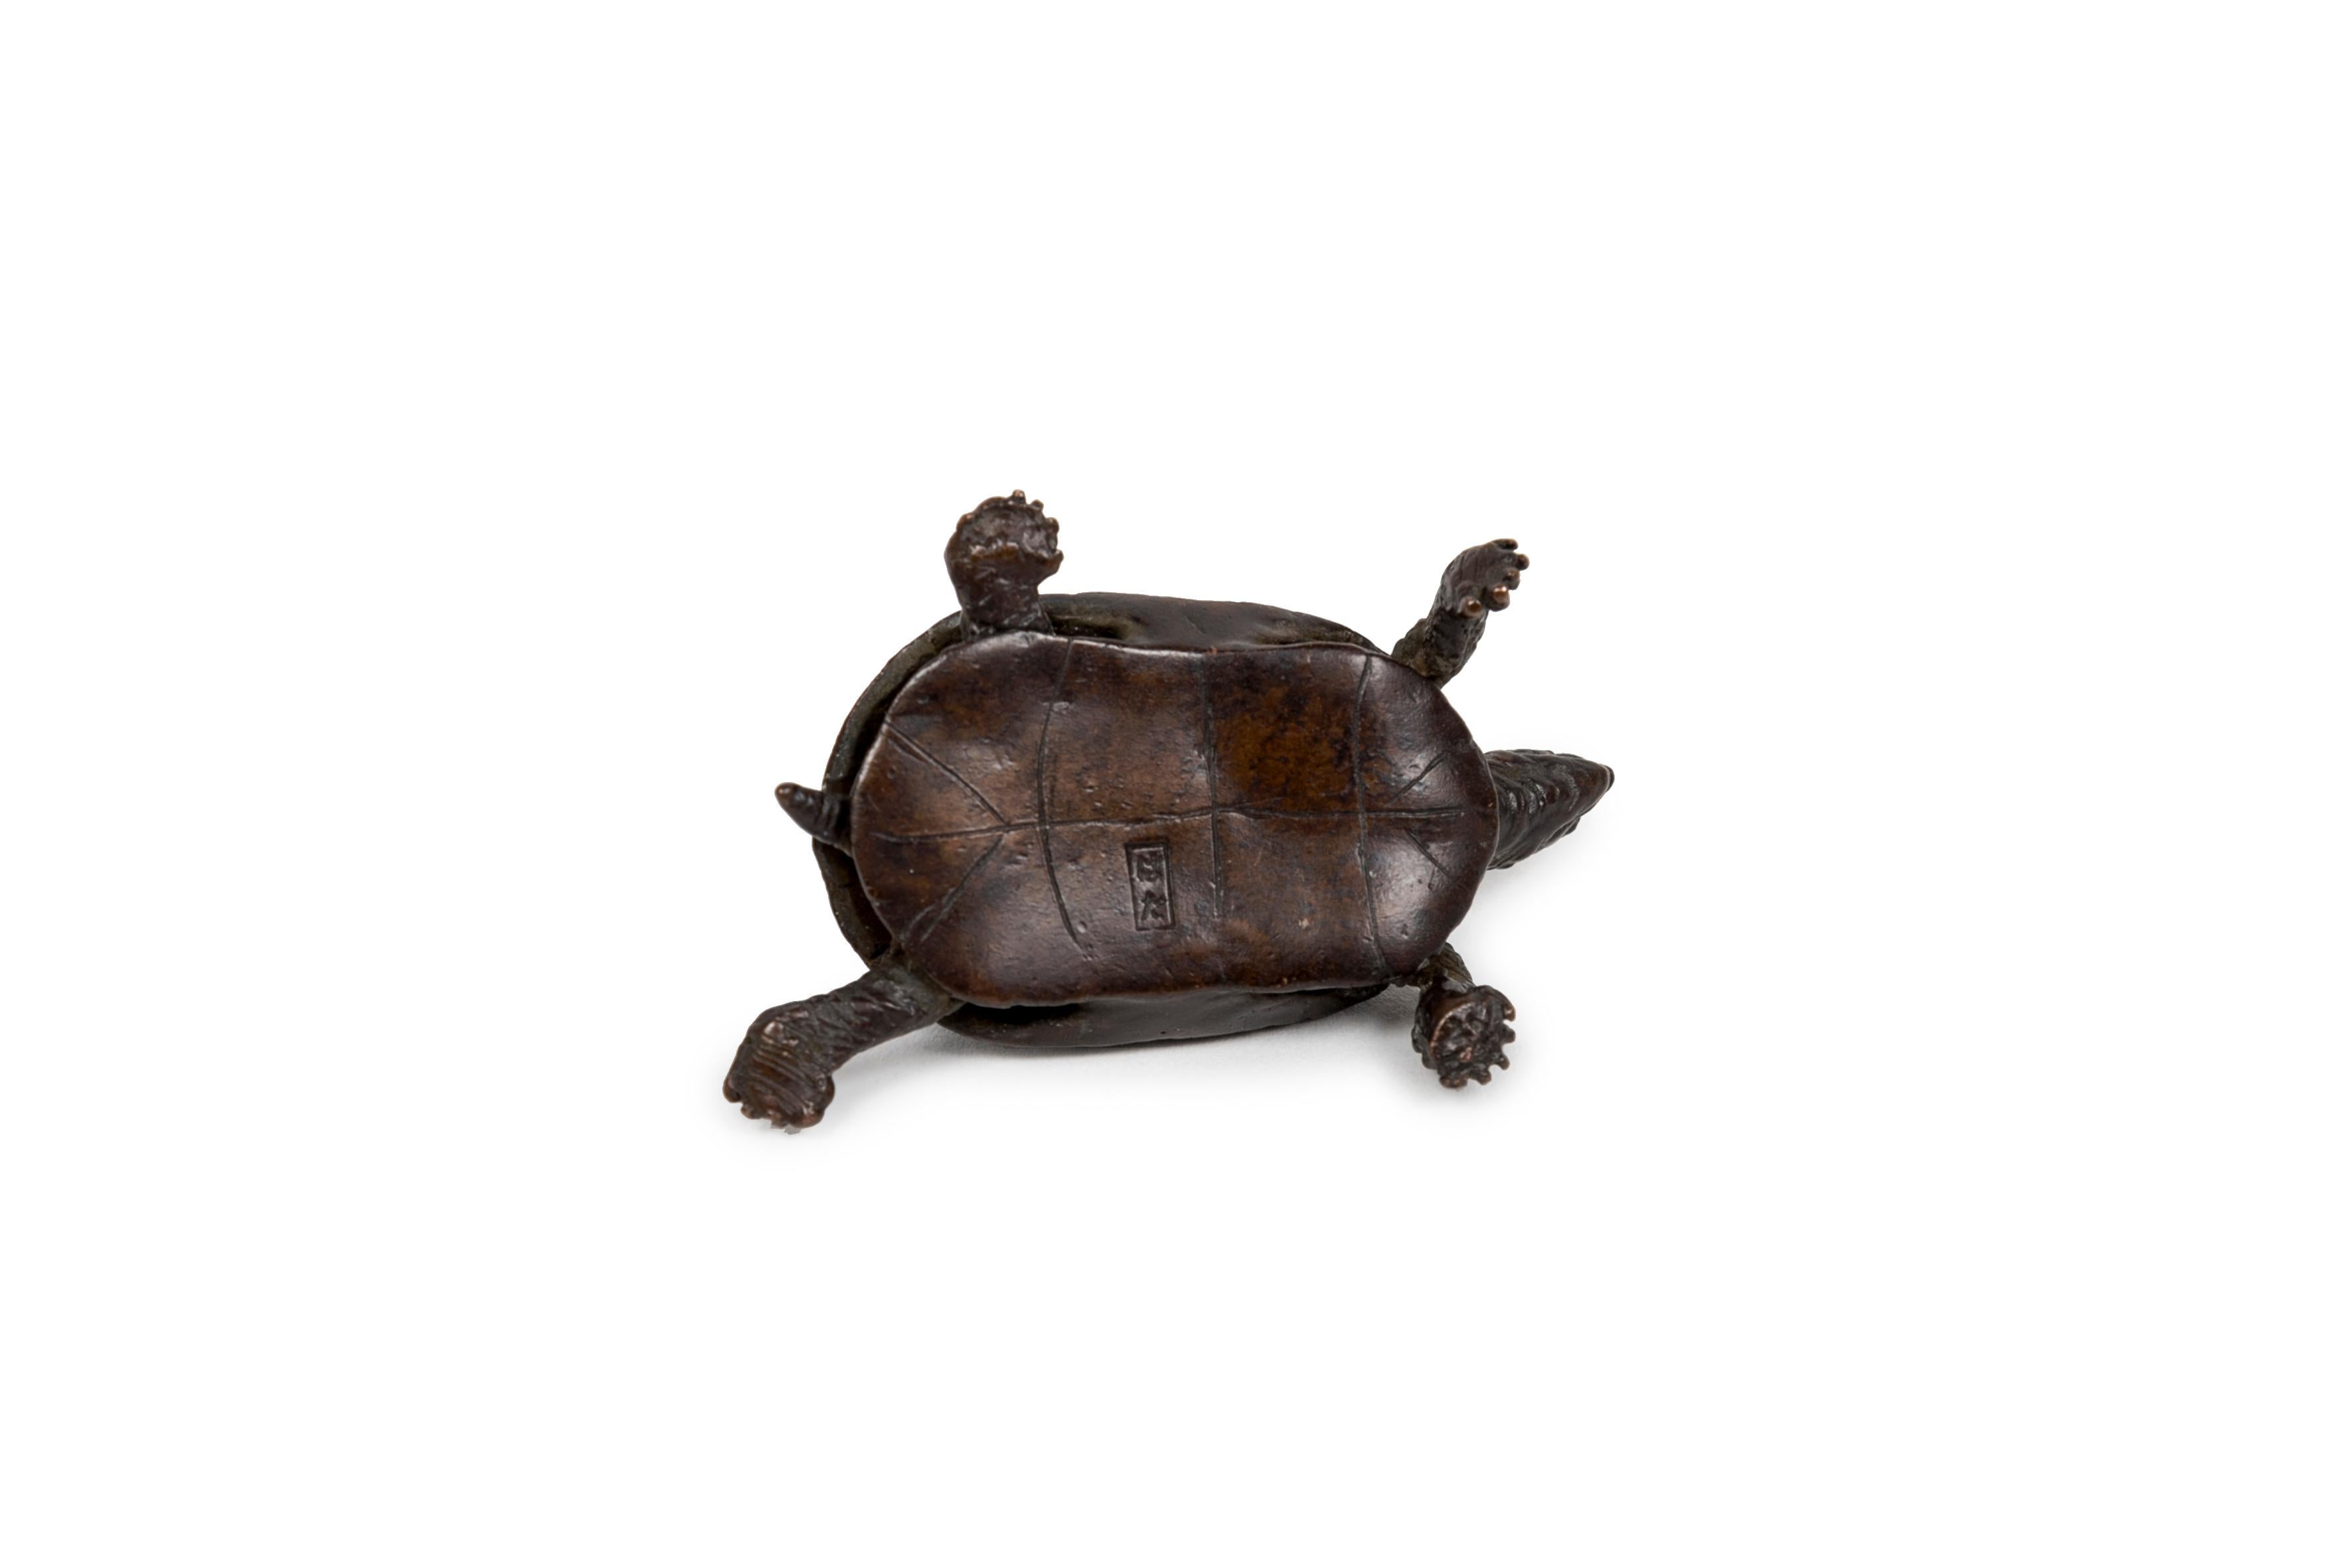 19th Century Japanese bronze okimono turtle (sculpture) For Sale